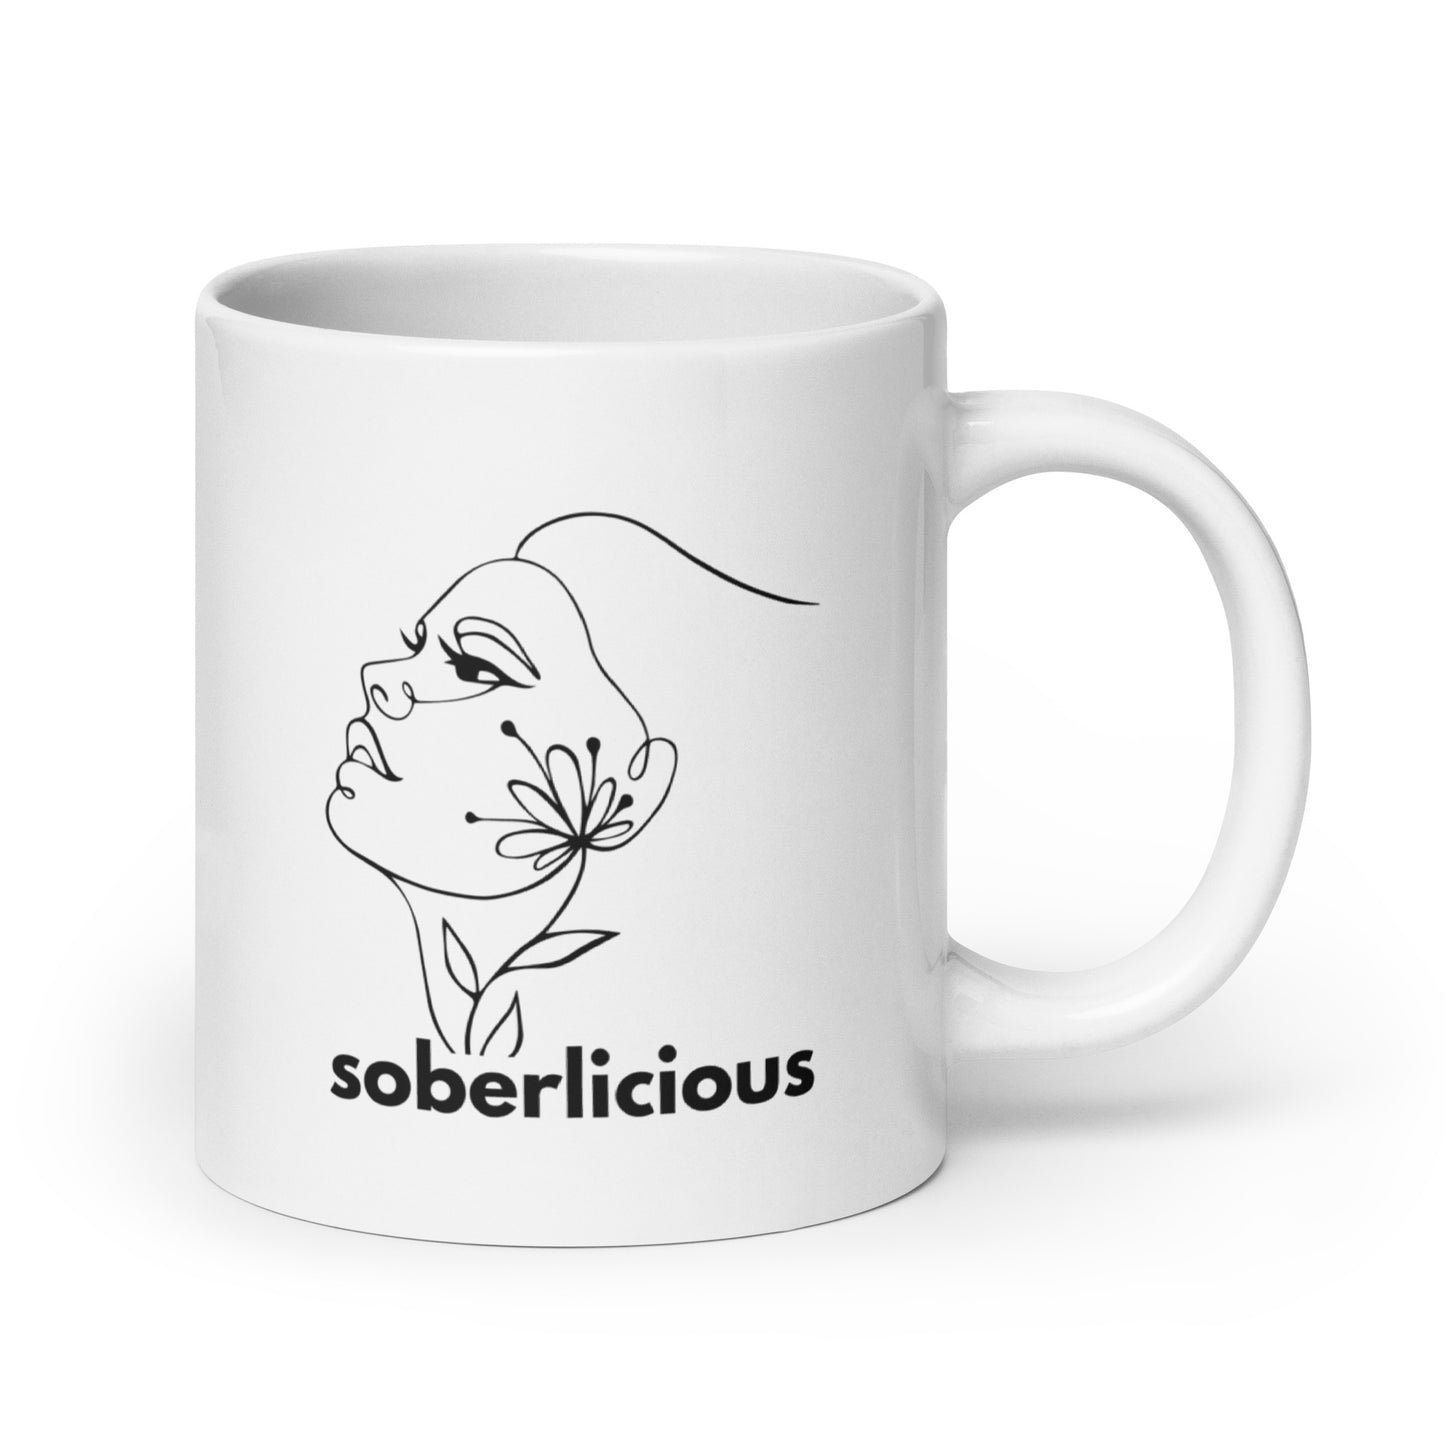 Soberlicious Mug